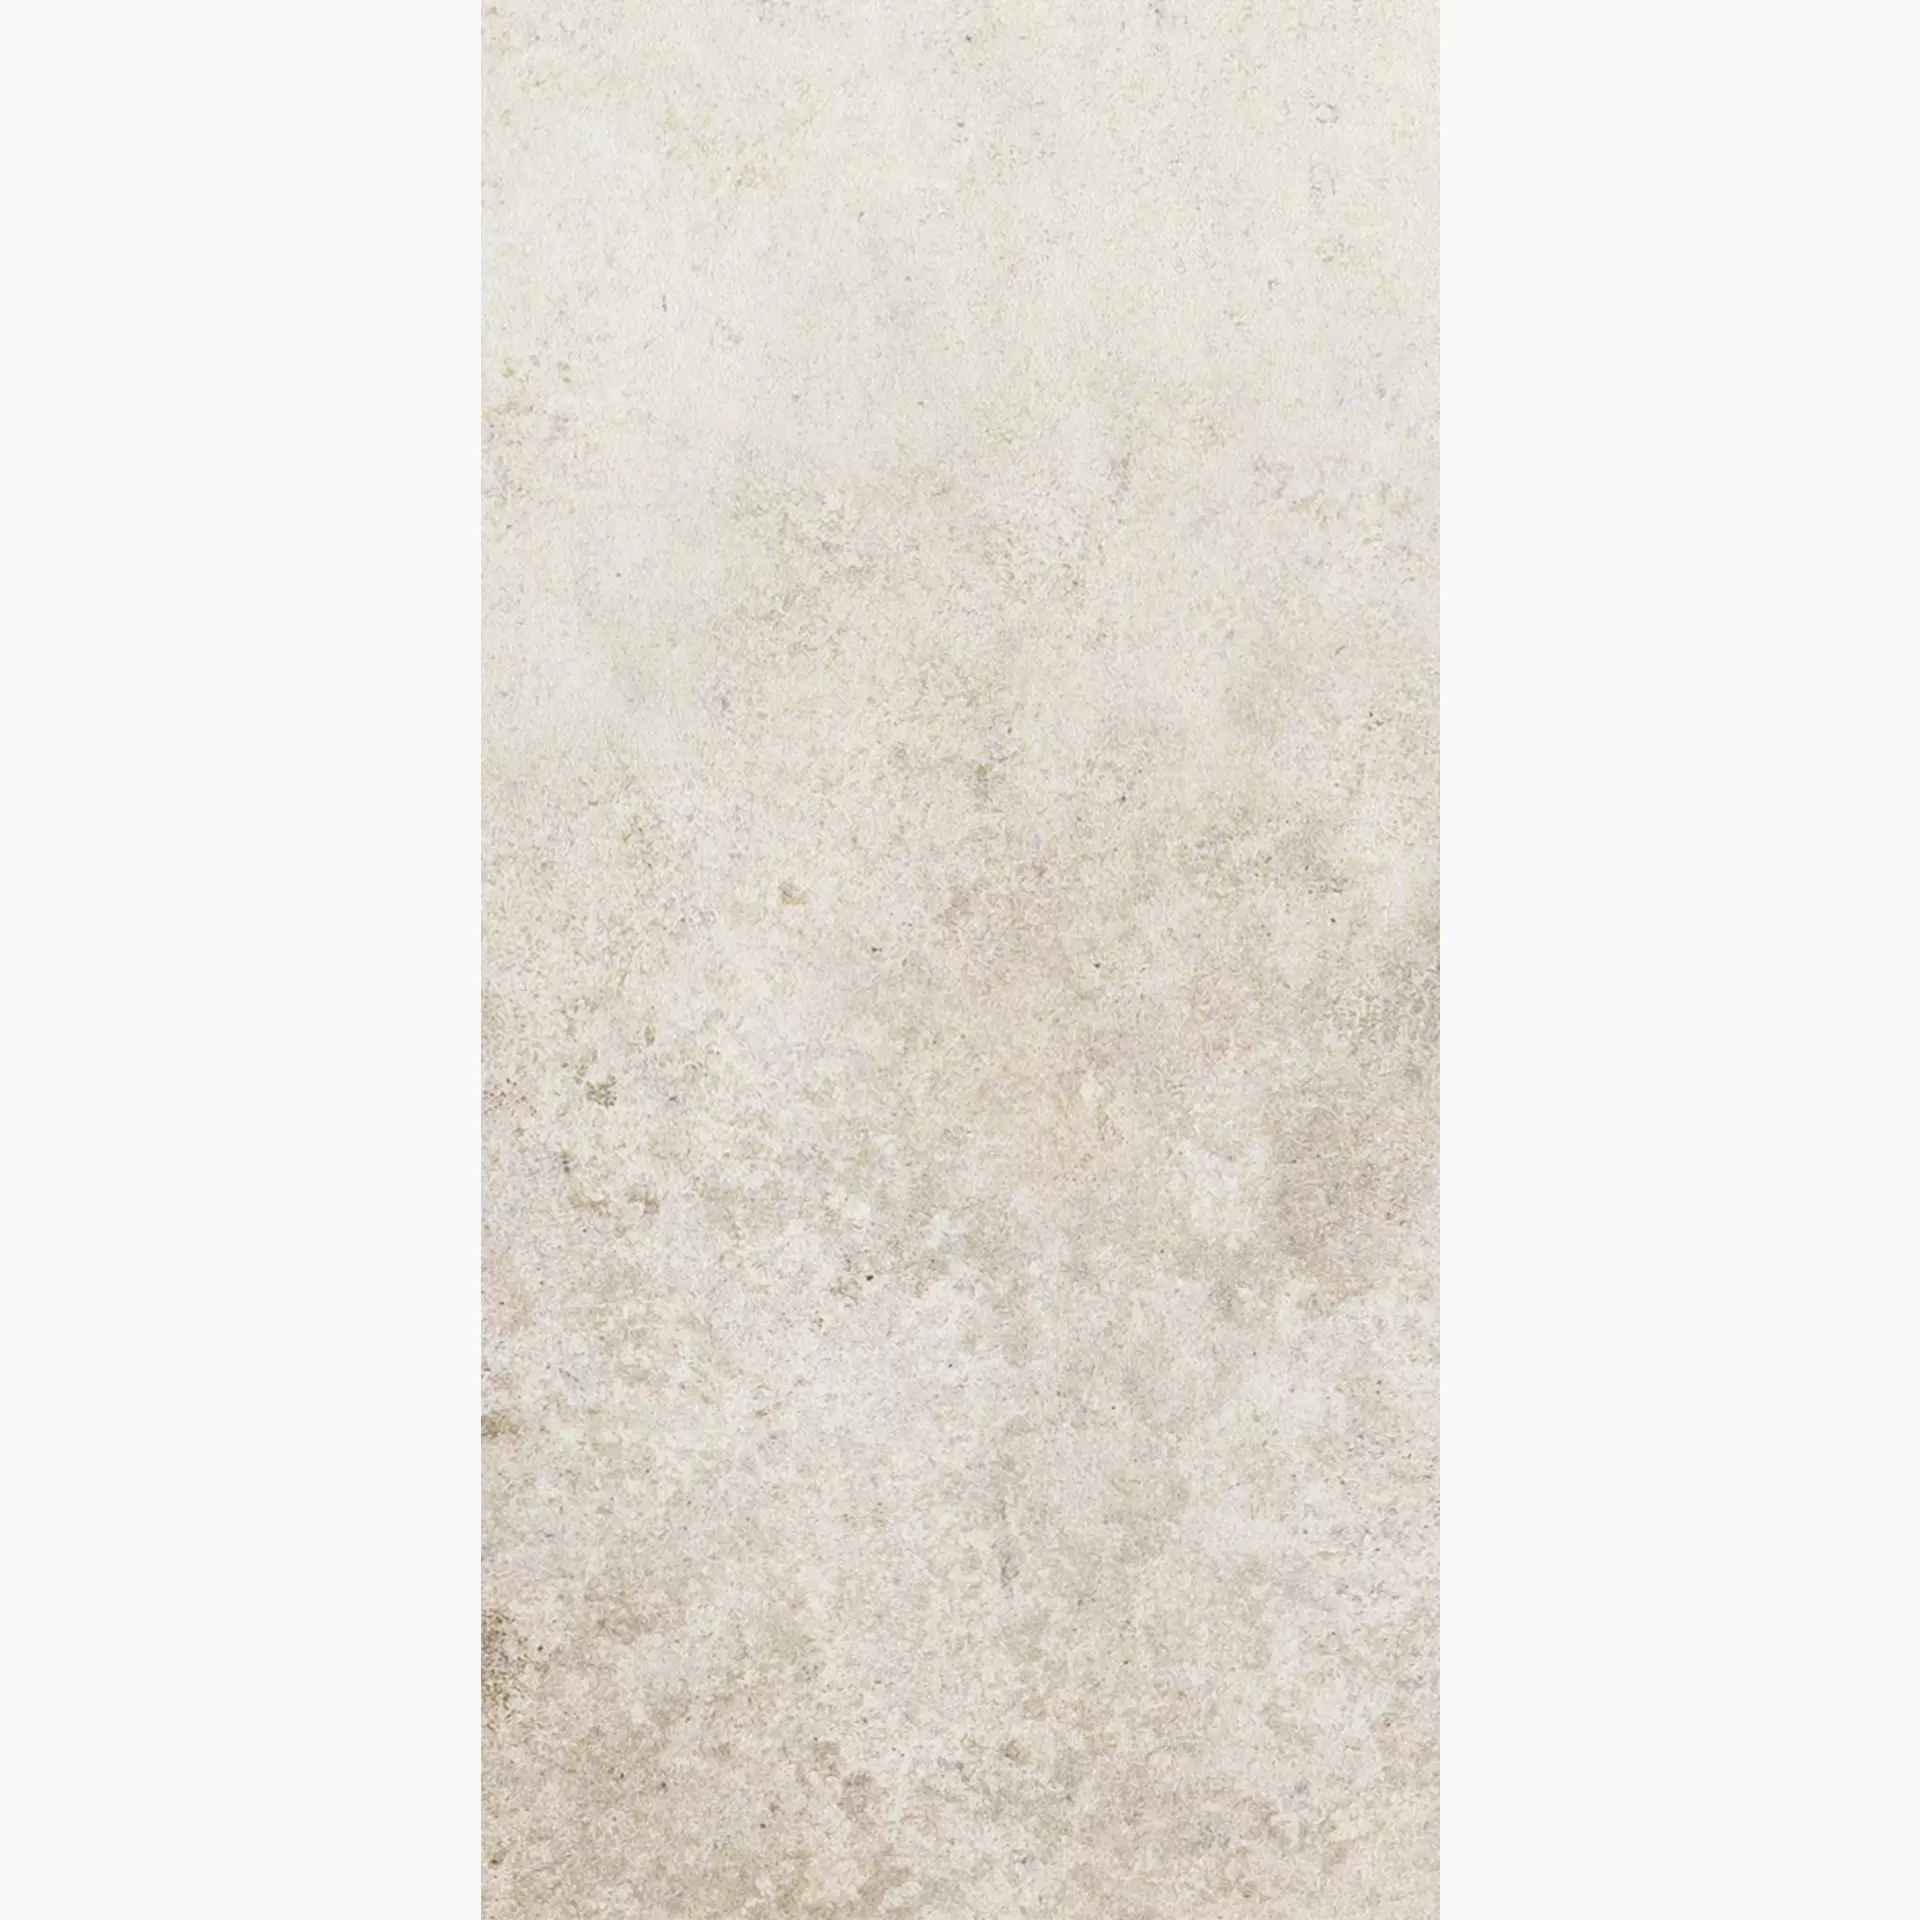 Florim Artifact Of Cerim Aged White Naturale – Matt 760627 30x60cm rectified 9mm